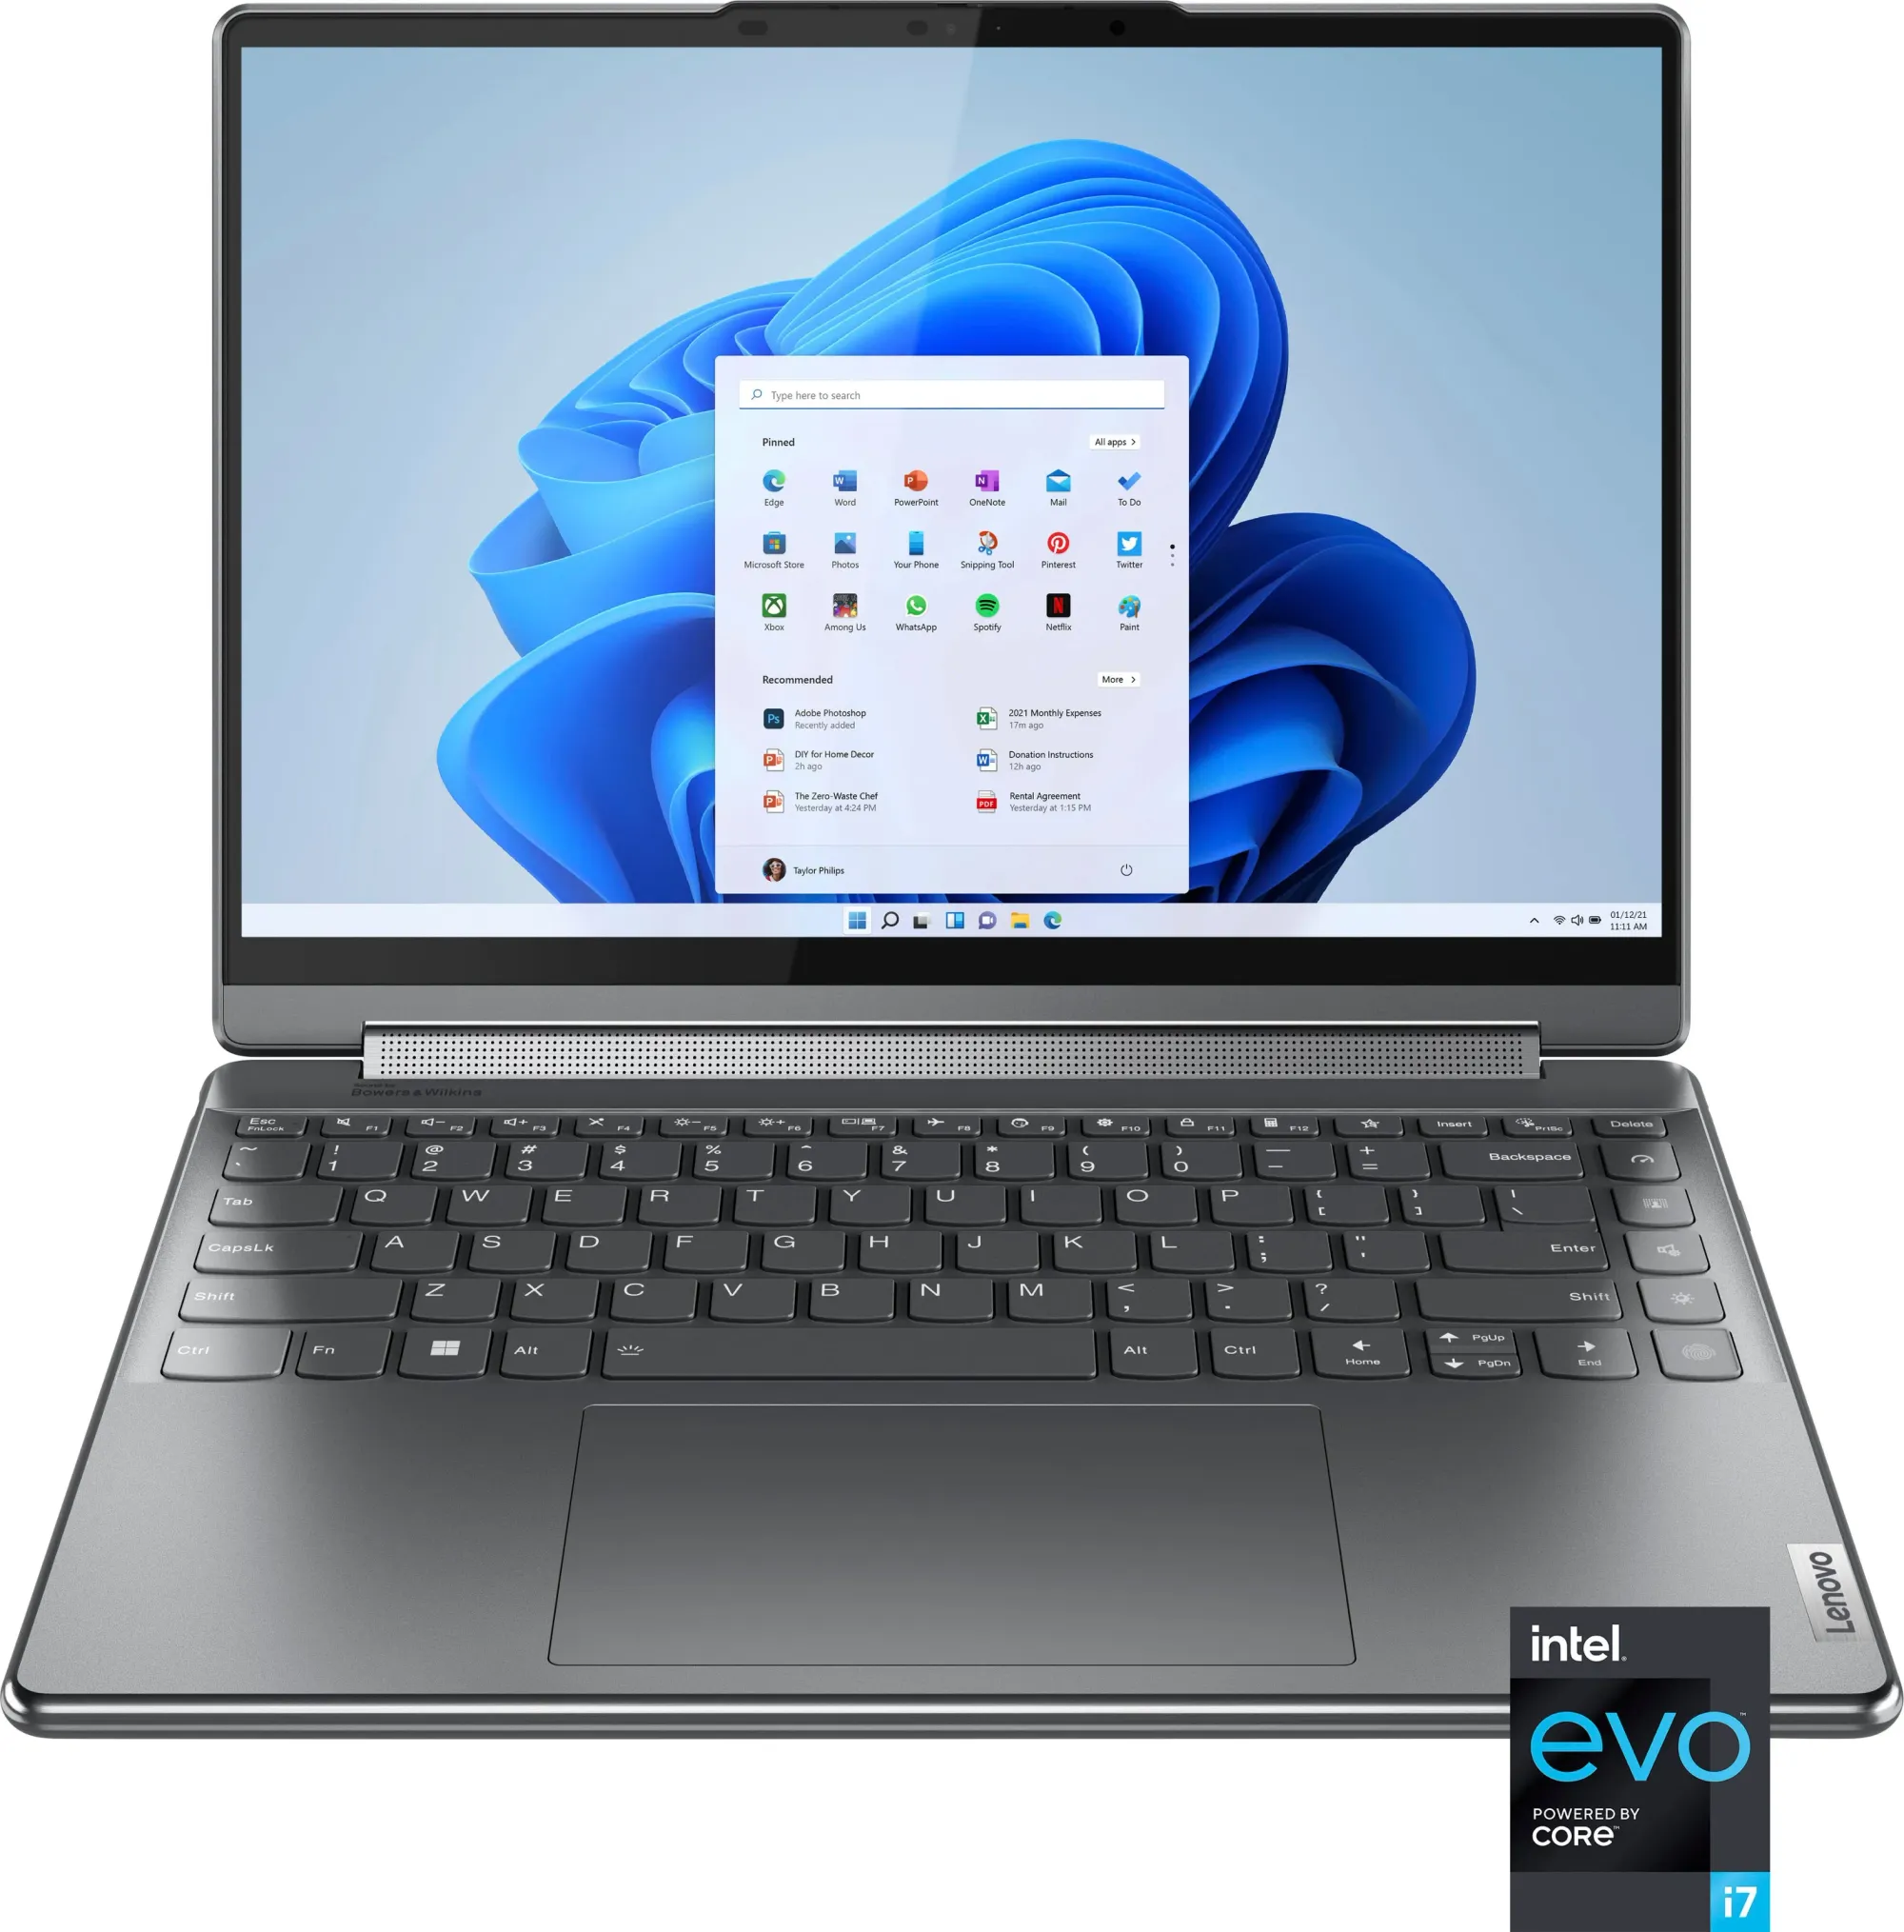 Lenovo Yoga 9i digital nomad laptop for travel